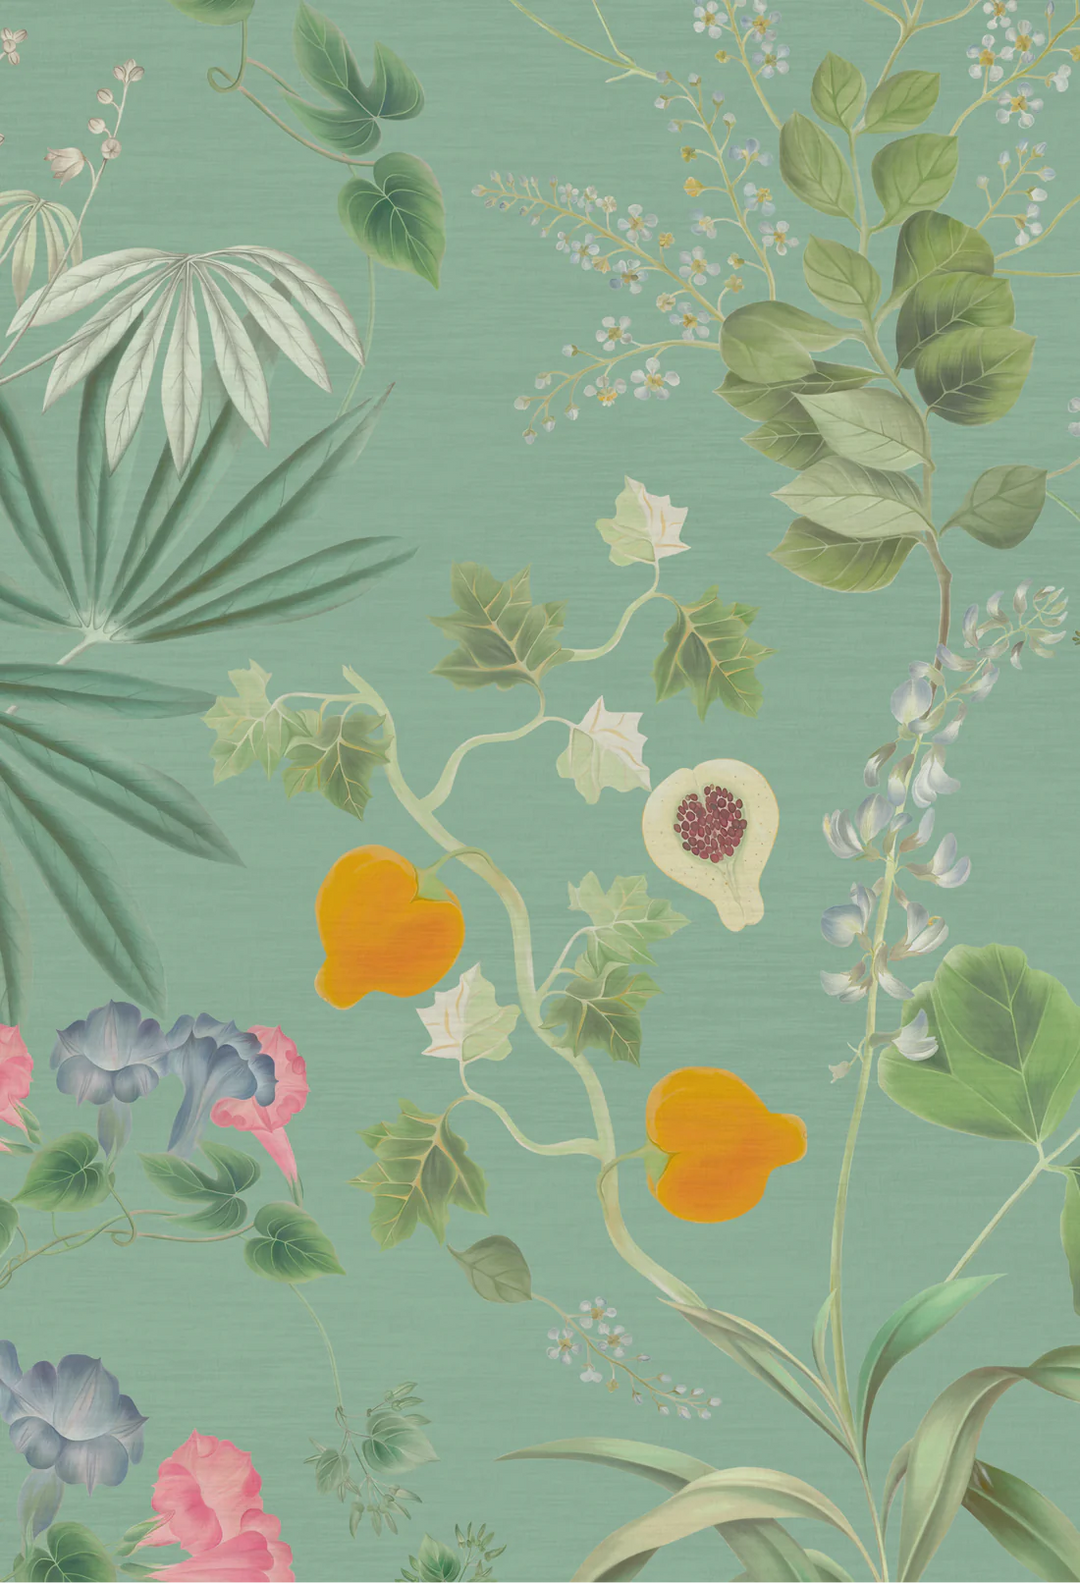 Deus-ex-gardenia-wallpaper-eden-botanical-print-hand-illustrated-exotic-palms-forbidden-fruits-print-spring-green-pink-blue-print-green-background